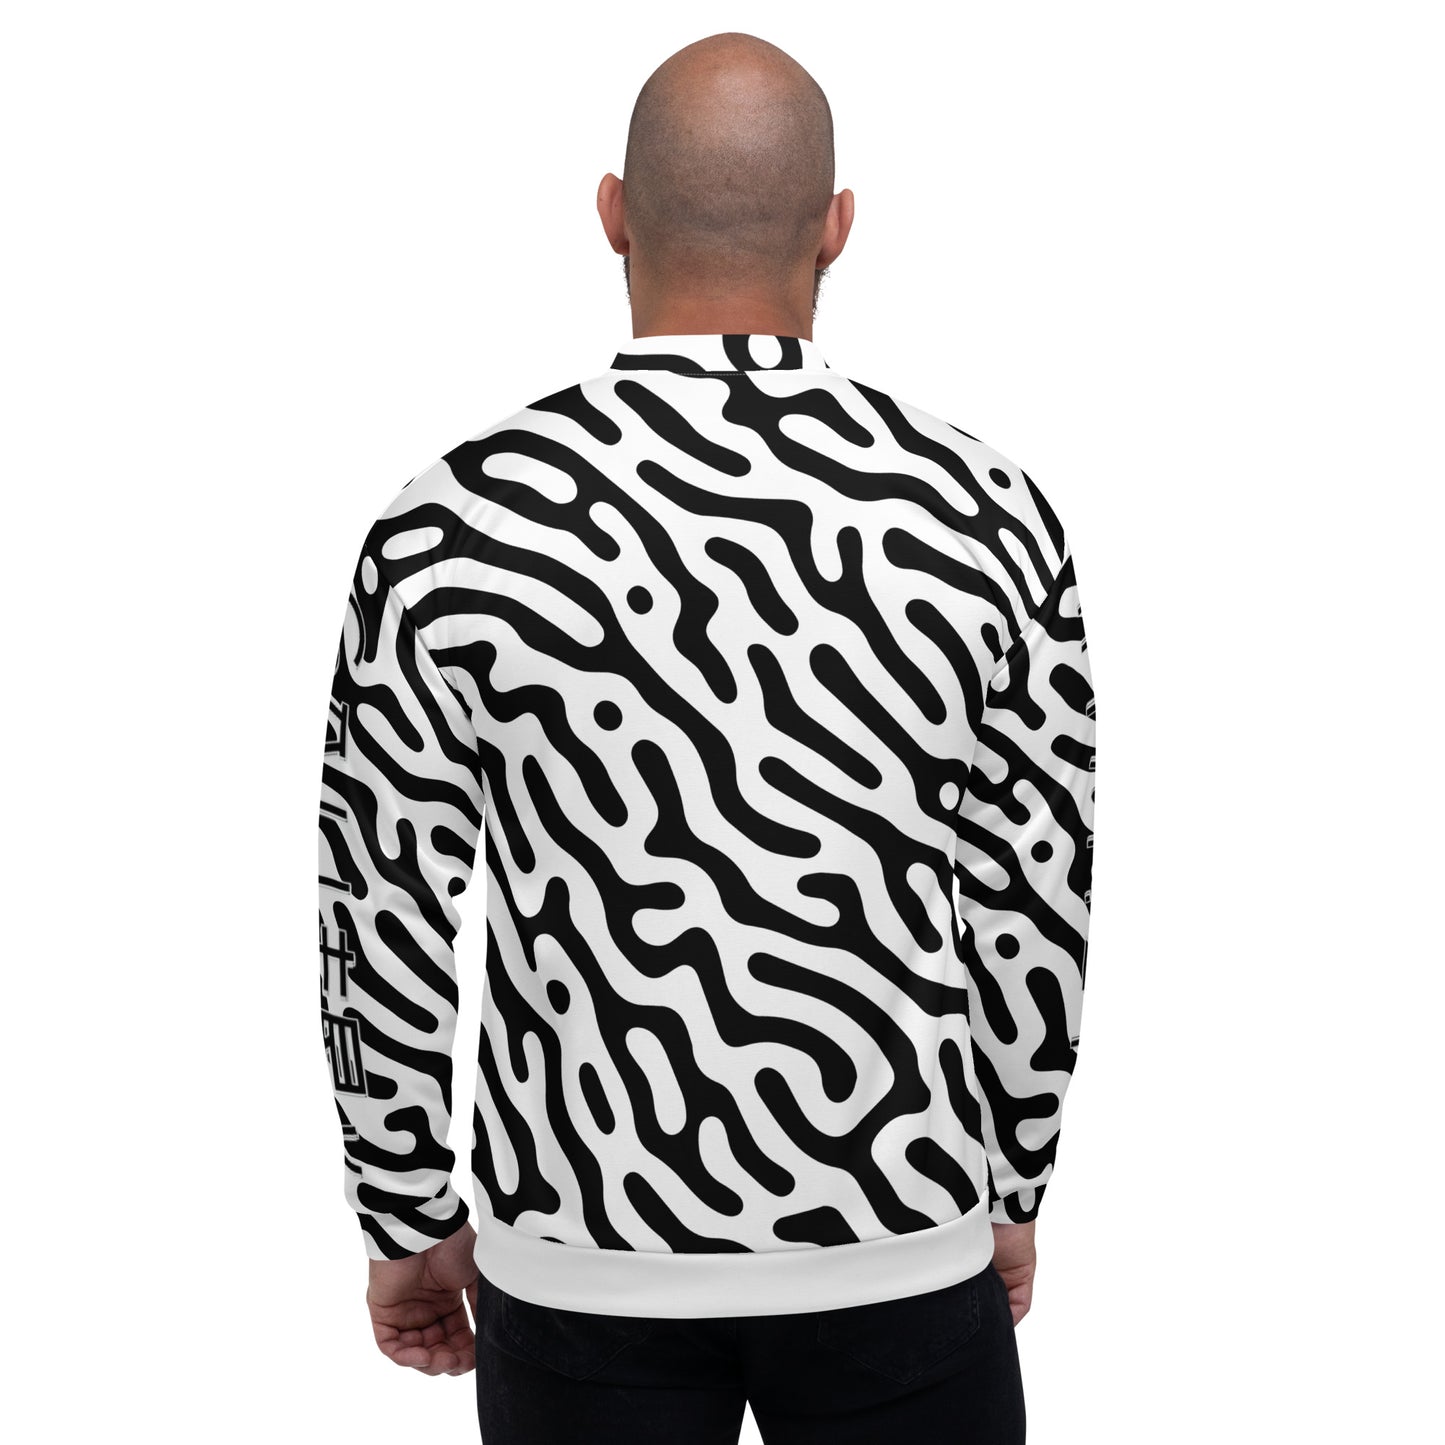 Atziluth Gallery "ATZ Zebra" Bomber Jacket